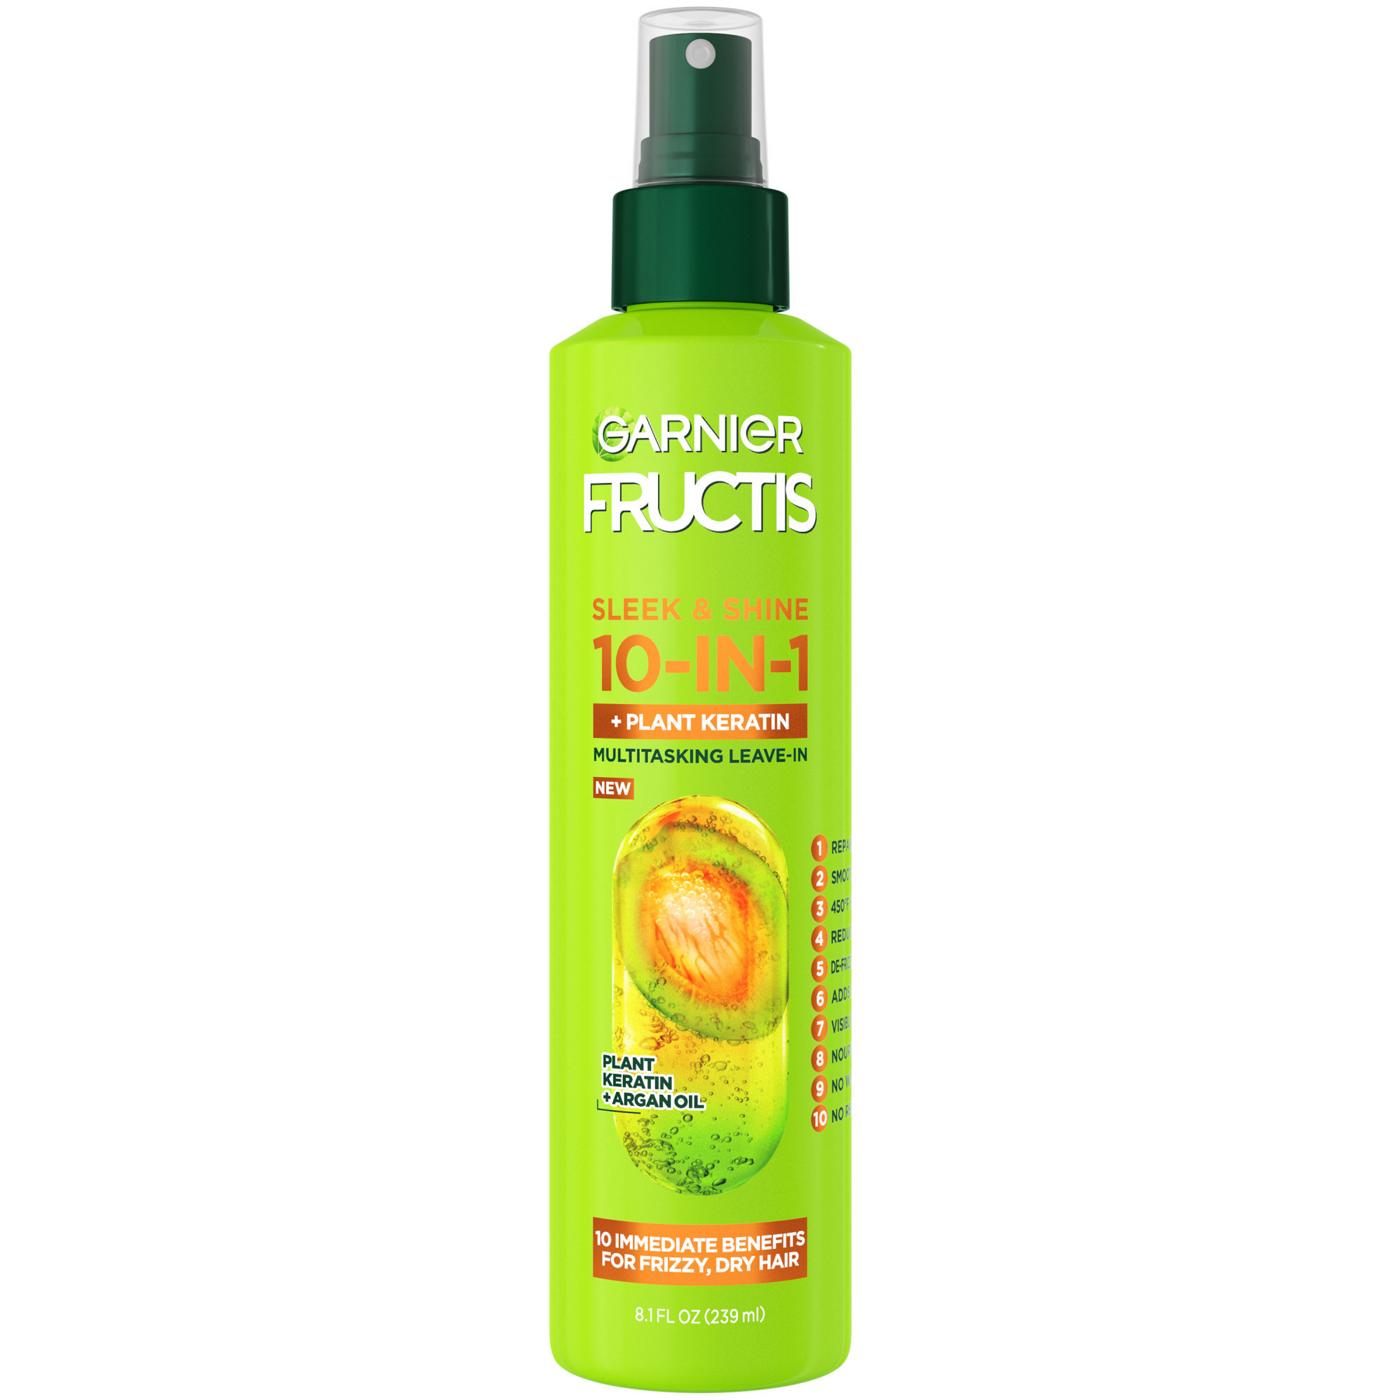 Garnier Fructis Sleek & Shine 10-in-1 Leave-In Spray; image 1 of 9